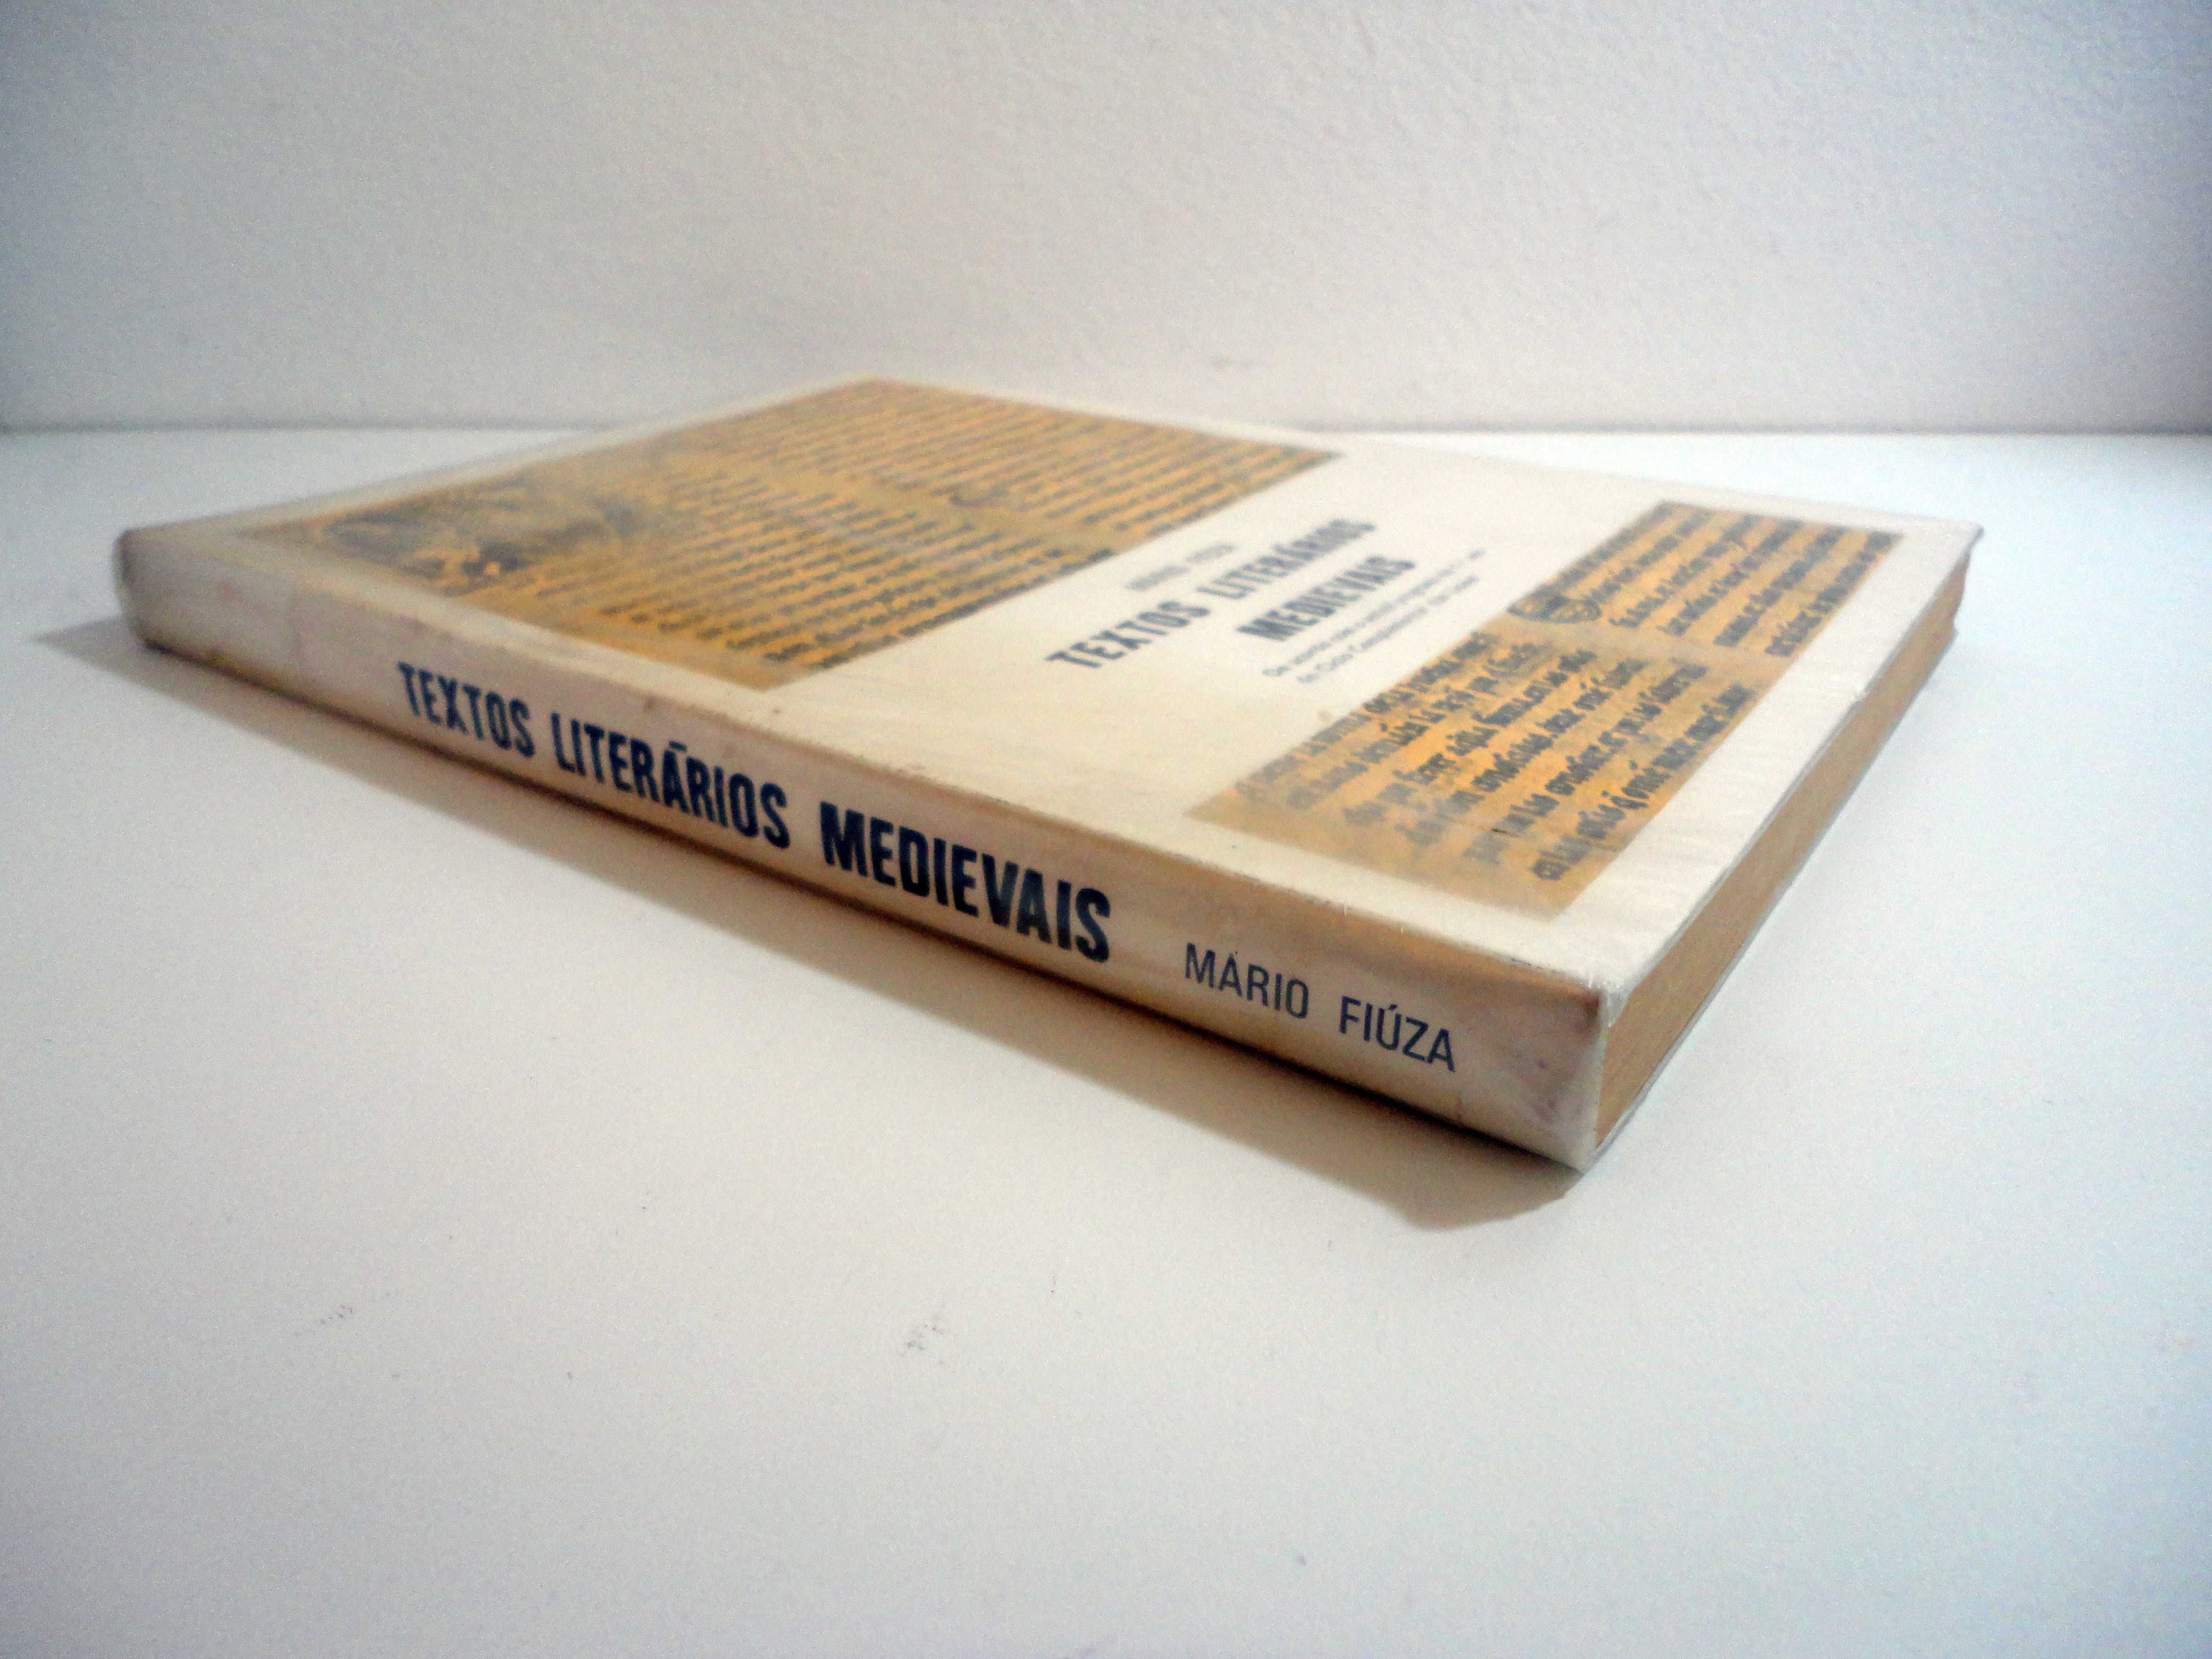 "Textos Literários Medievais" (Mário Fiúza)